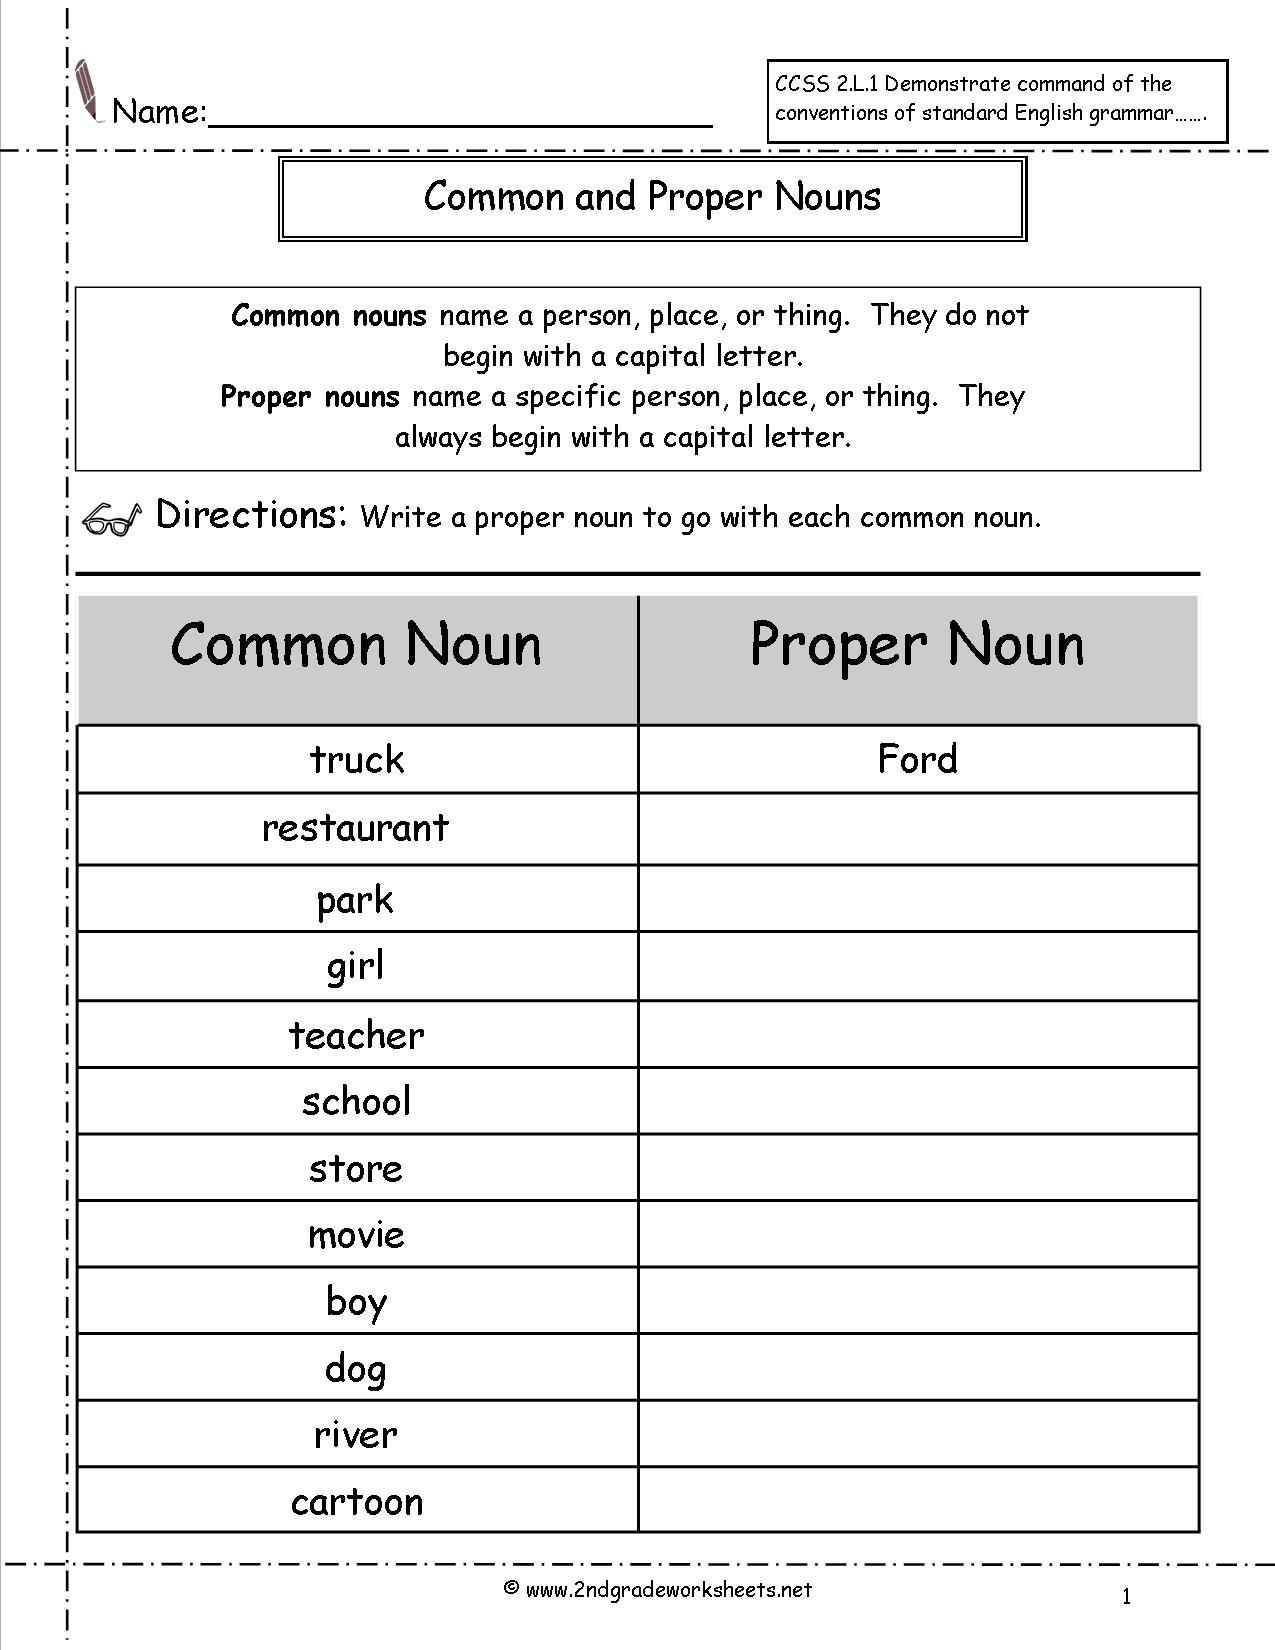 14 Best Images of Noun Worksheets Grade 7 - Plural Possessive Nouns ...